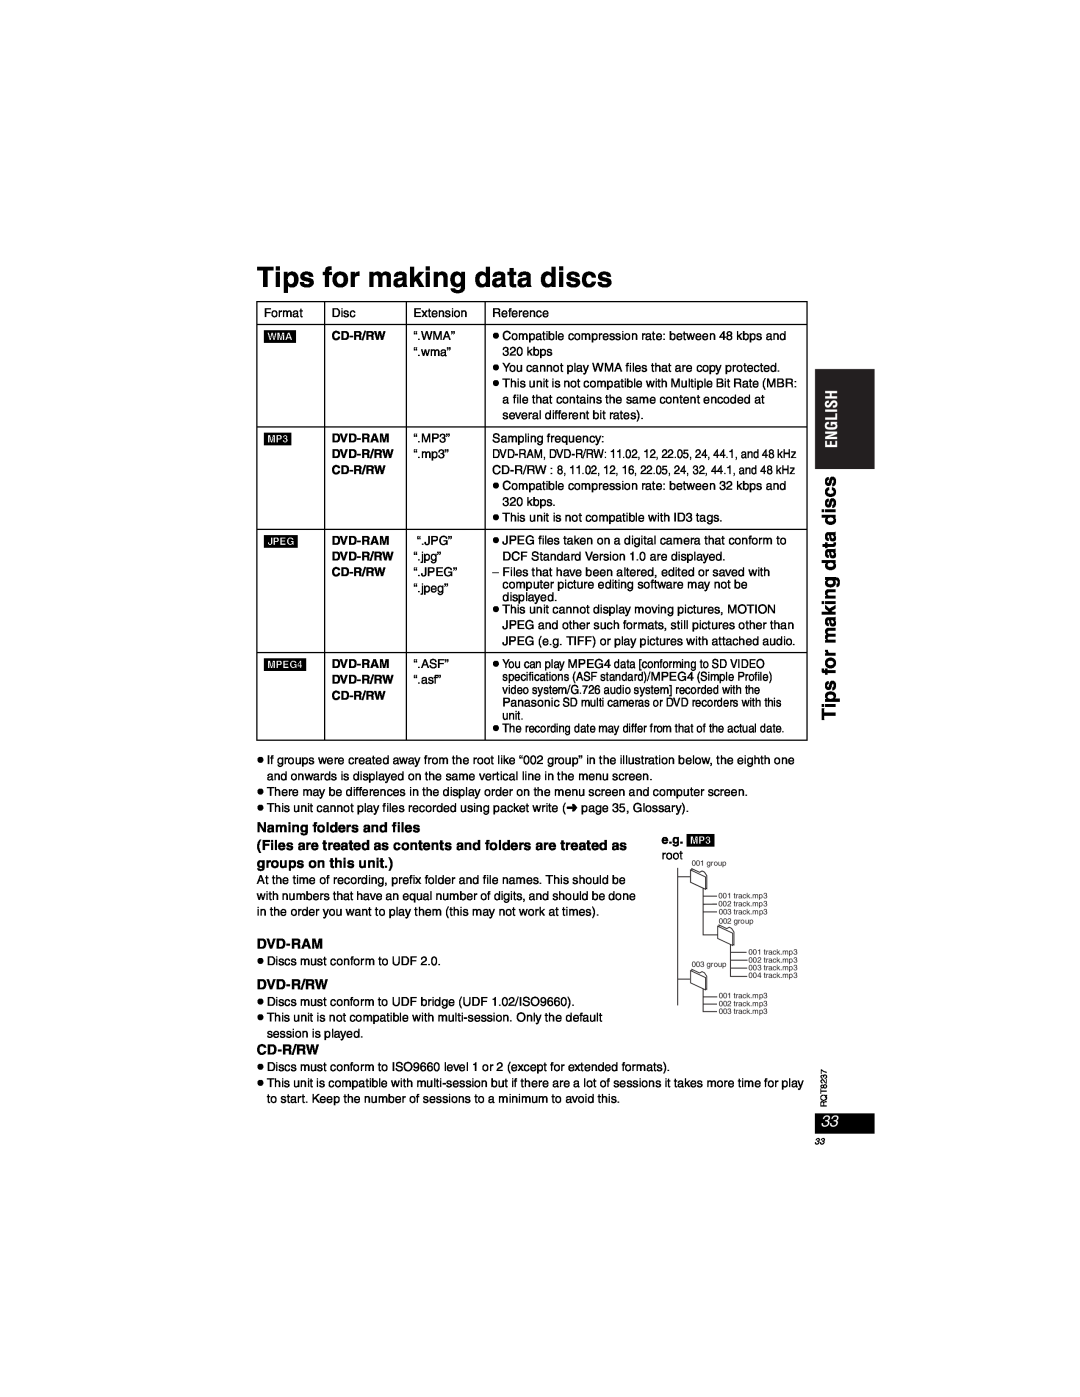 Panasonic DVD-LX97 Tips for making data discs, Naming folders and files, Dvd-Ram, Dvd-R/Rw, Cd-R/Rw, e.g. MP3 